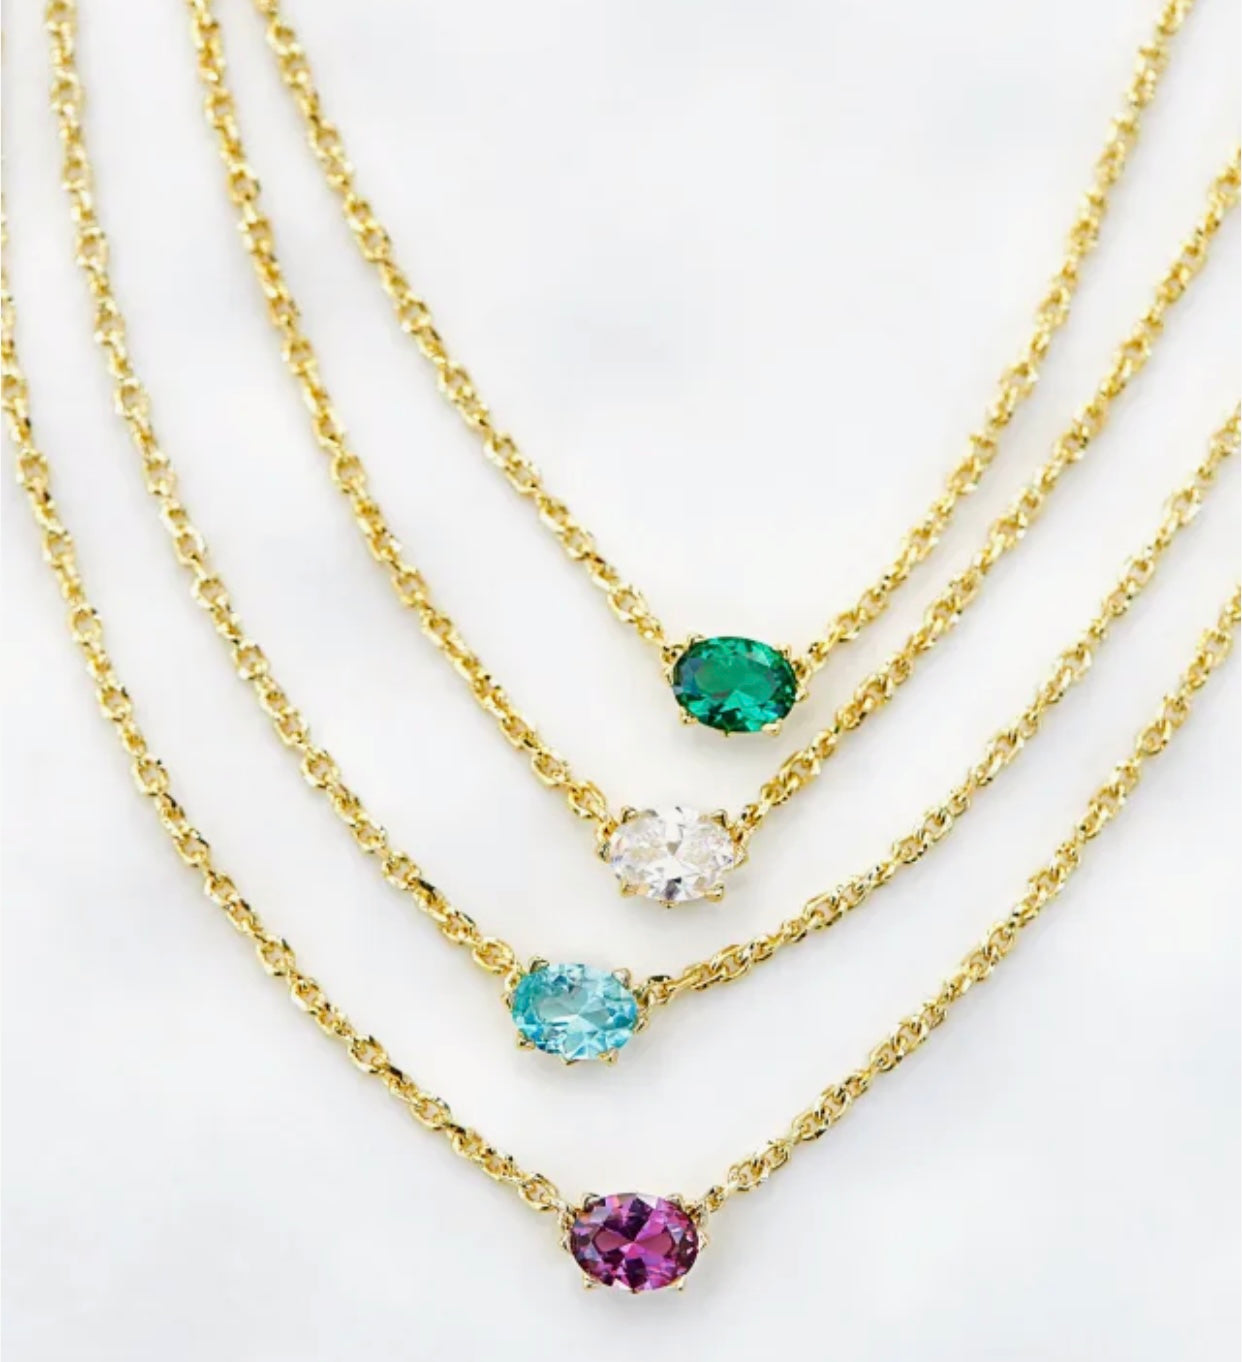 Cailin Aqua Crystal Pendant Gold Necklace